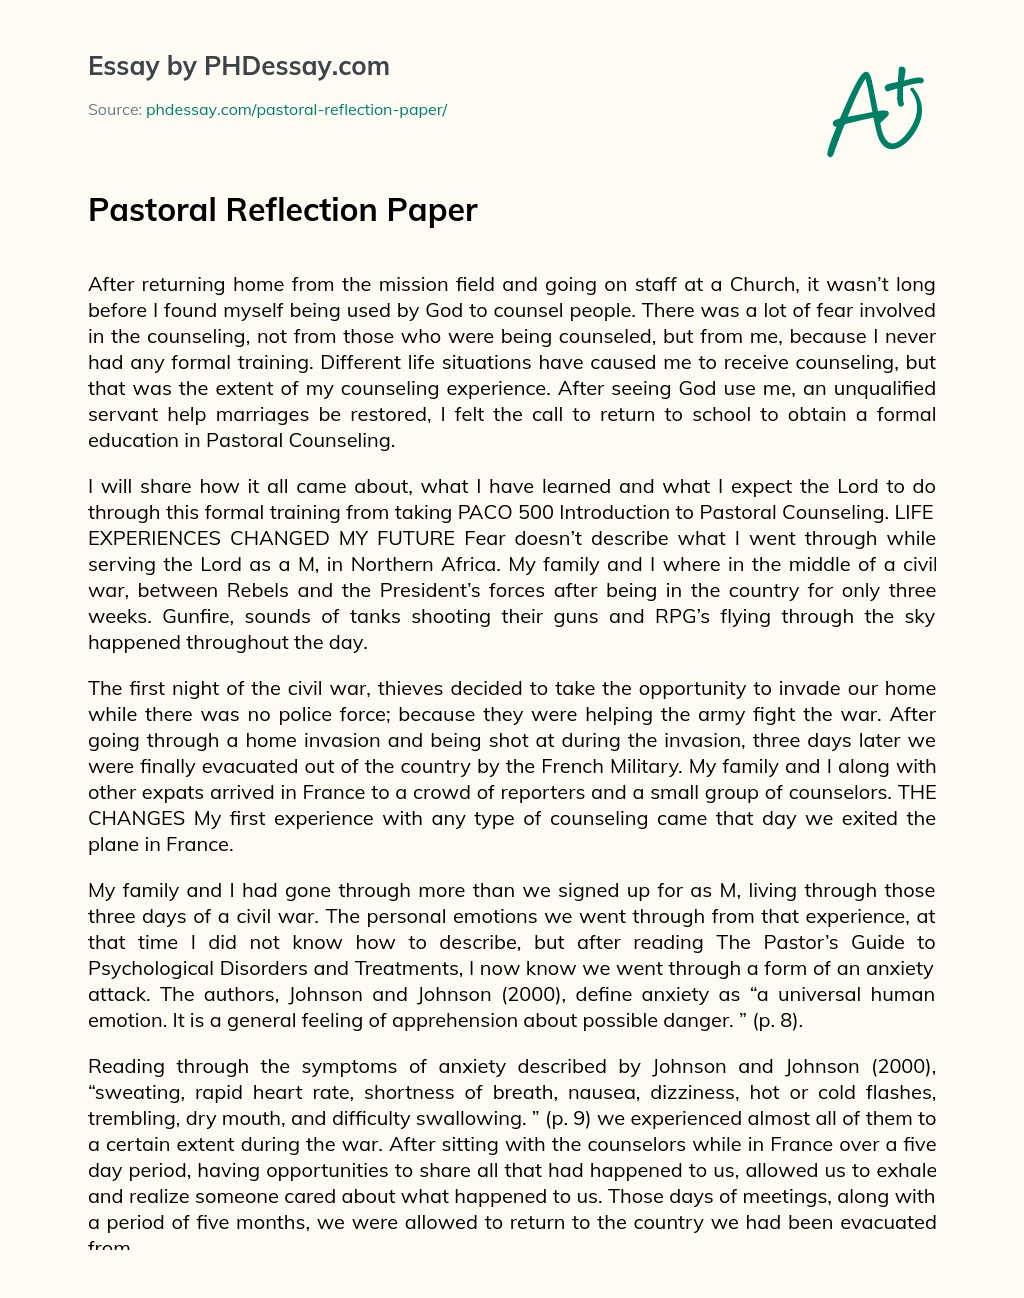 Pastoral Reflection Paper essay